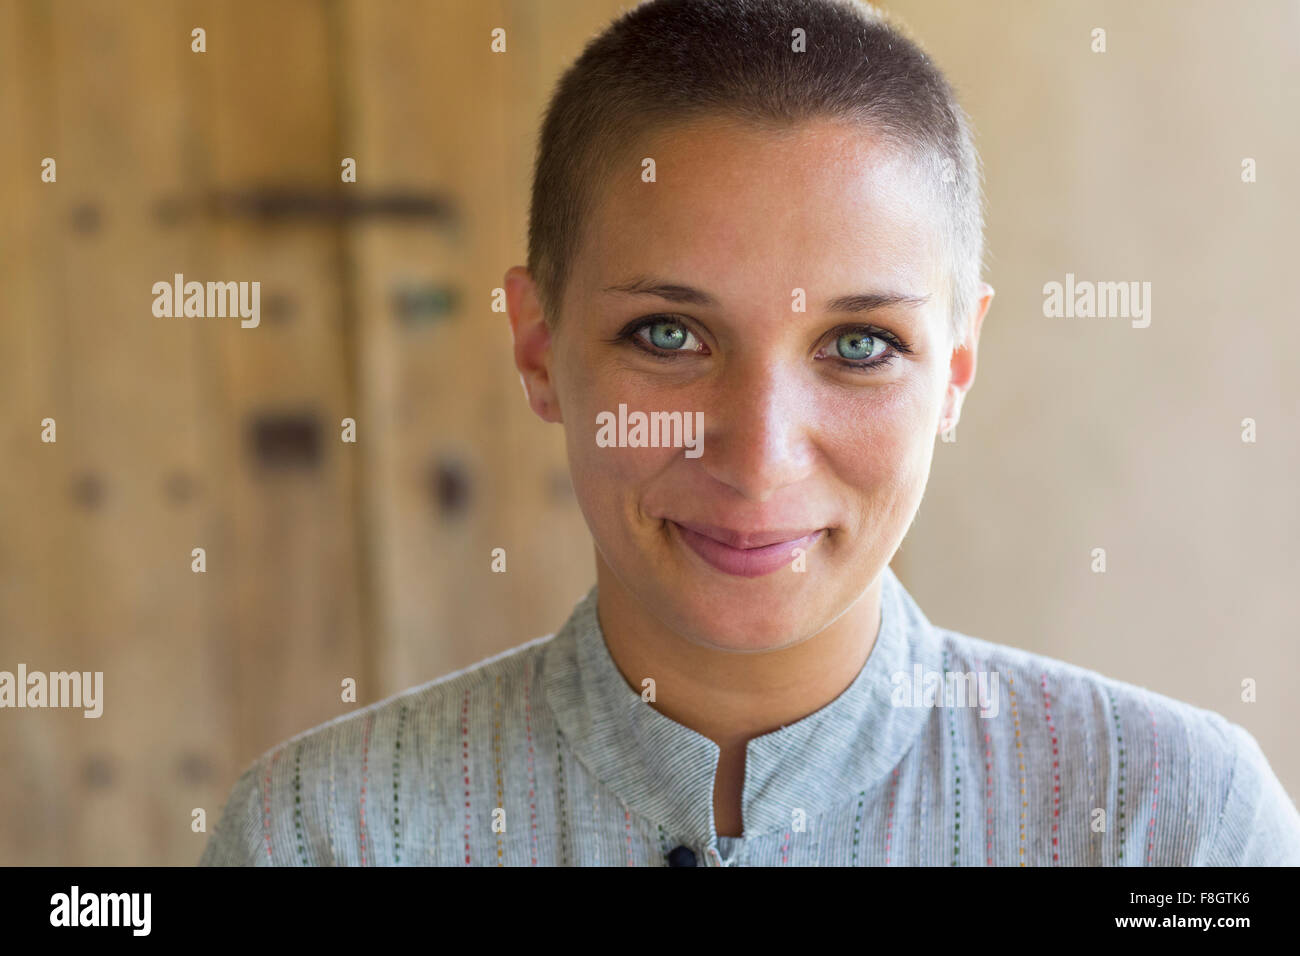 Caucasian woman smiling Stock Photo